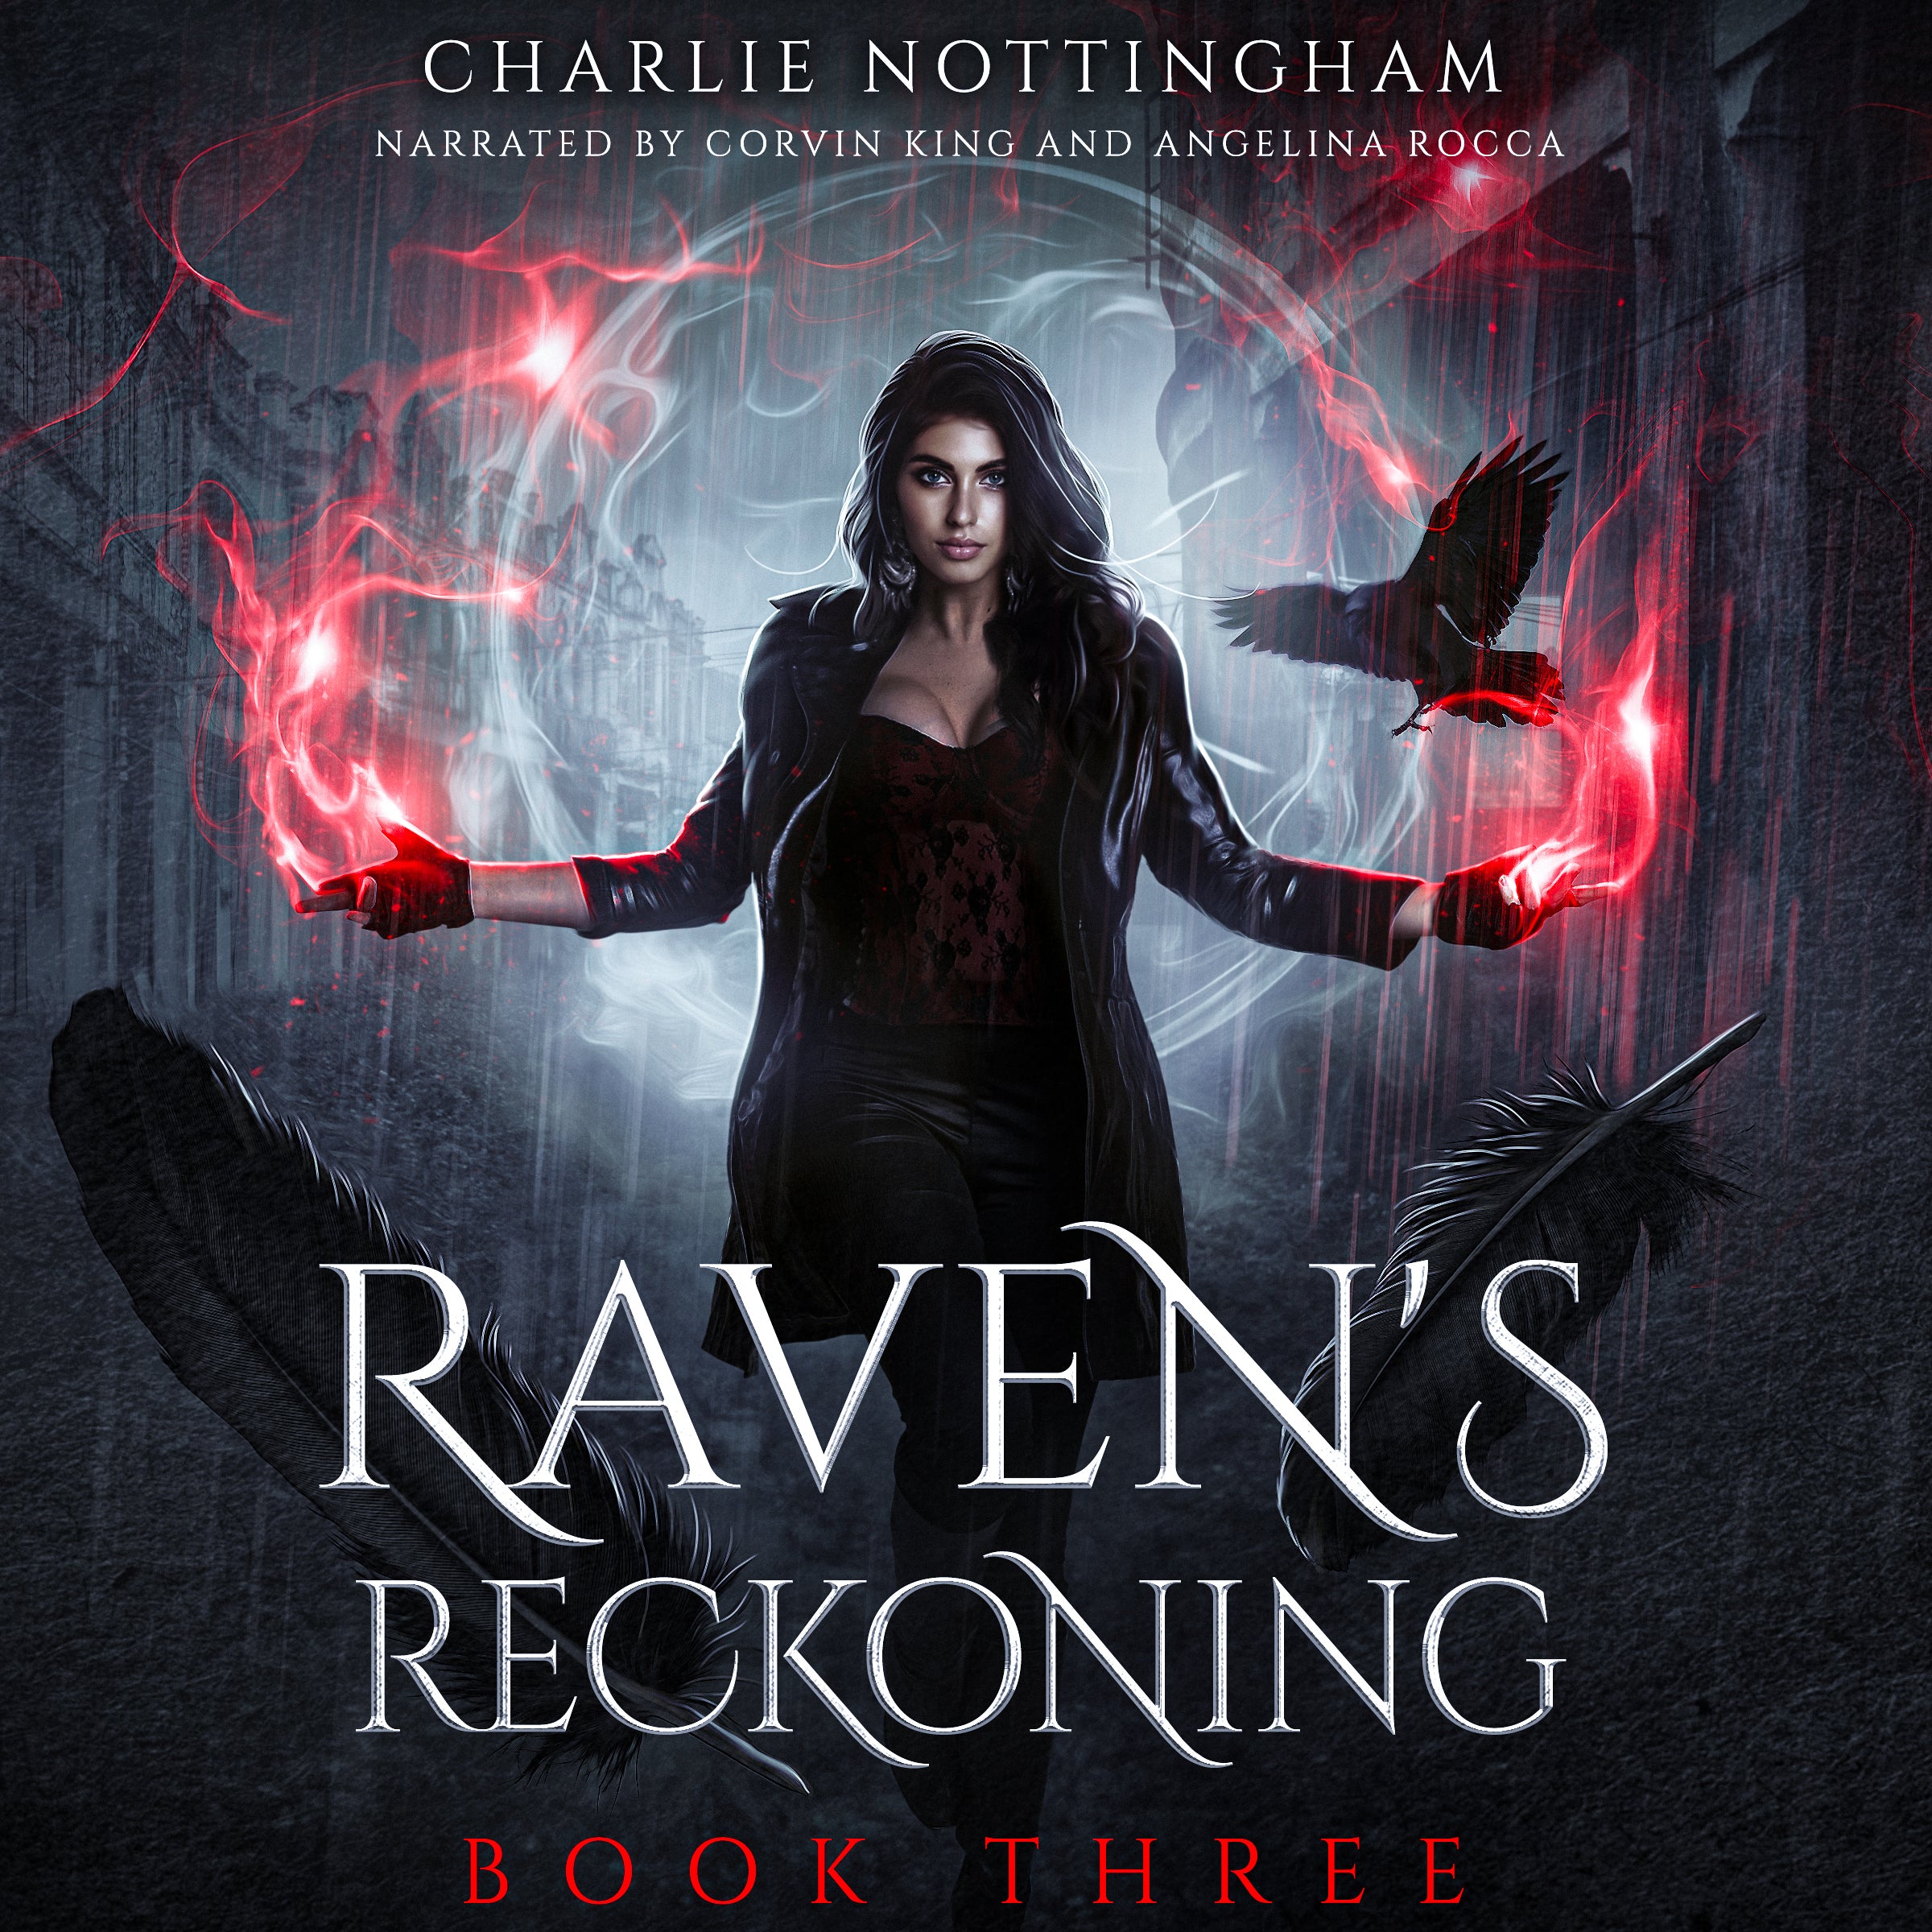 Raven's Reckoning: A Dark Paranormal Romance Audiobook 3